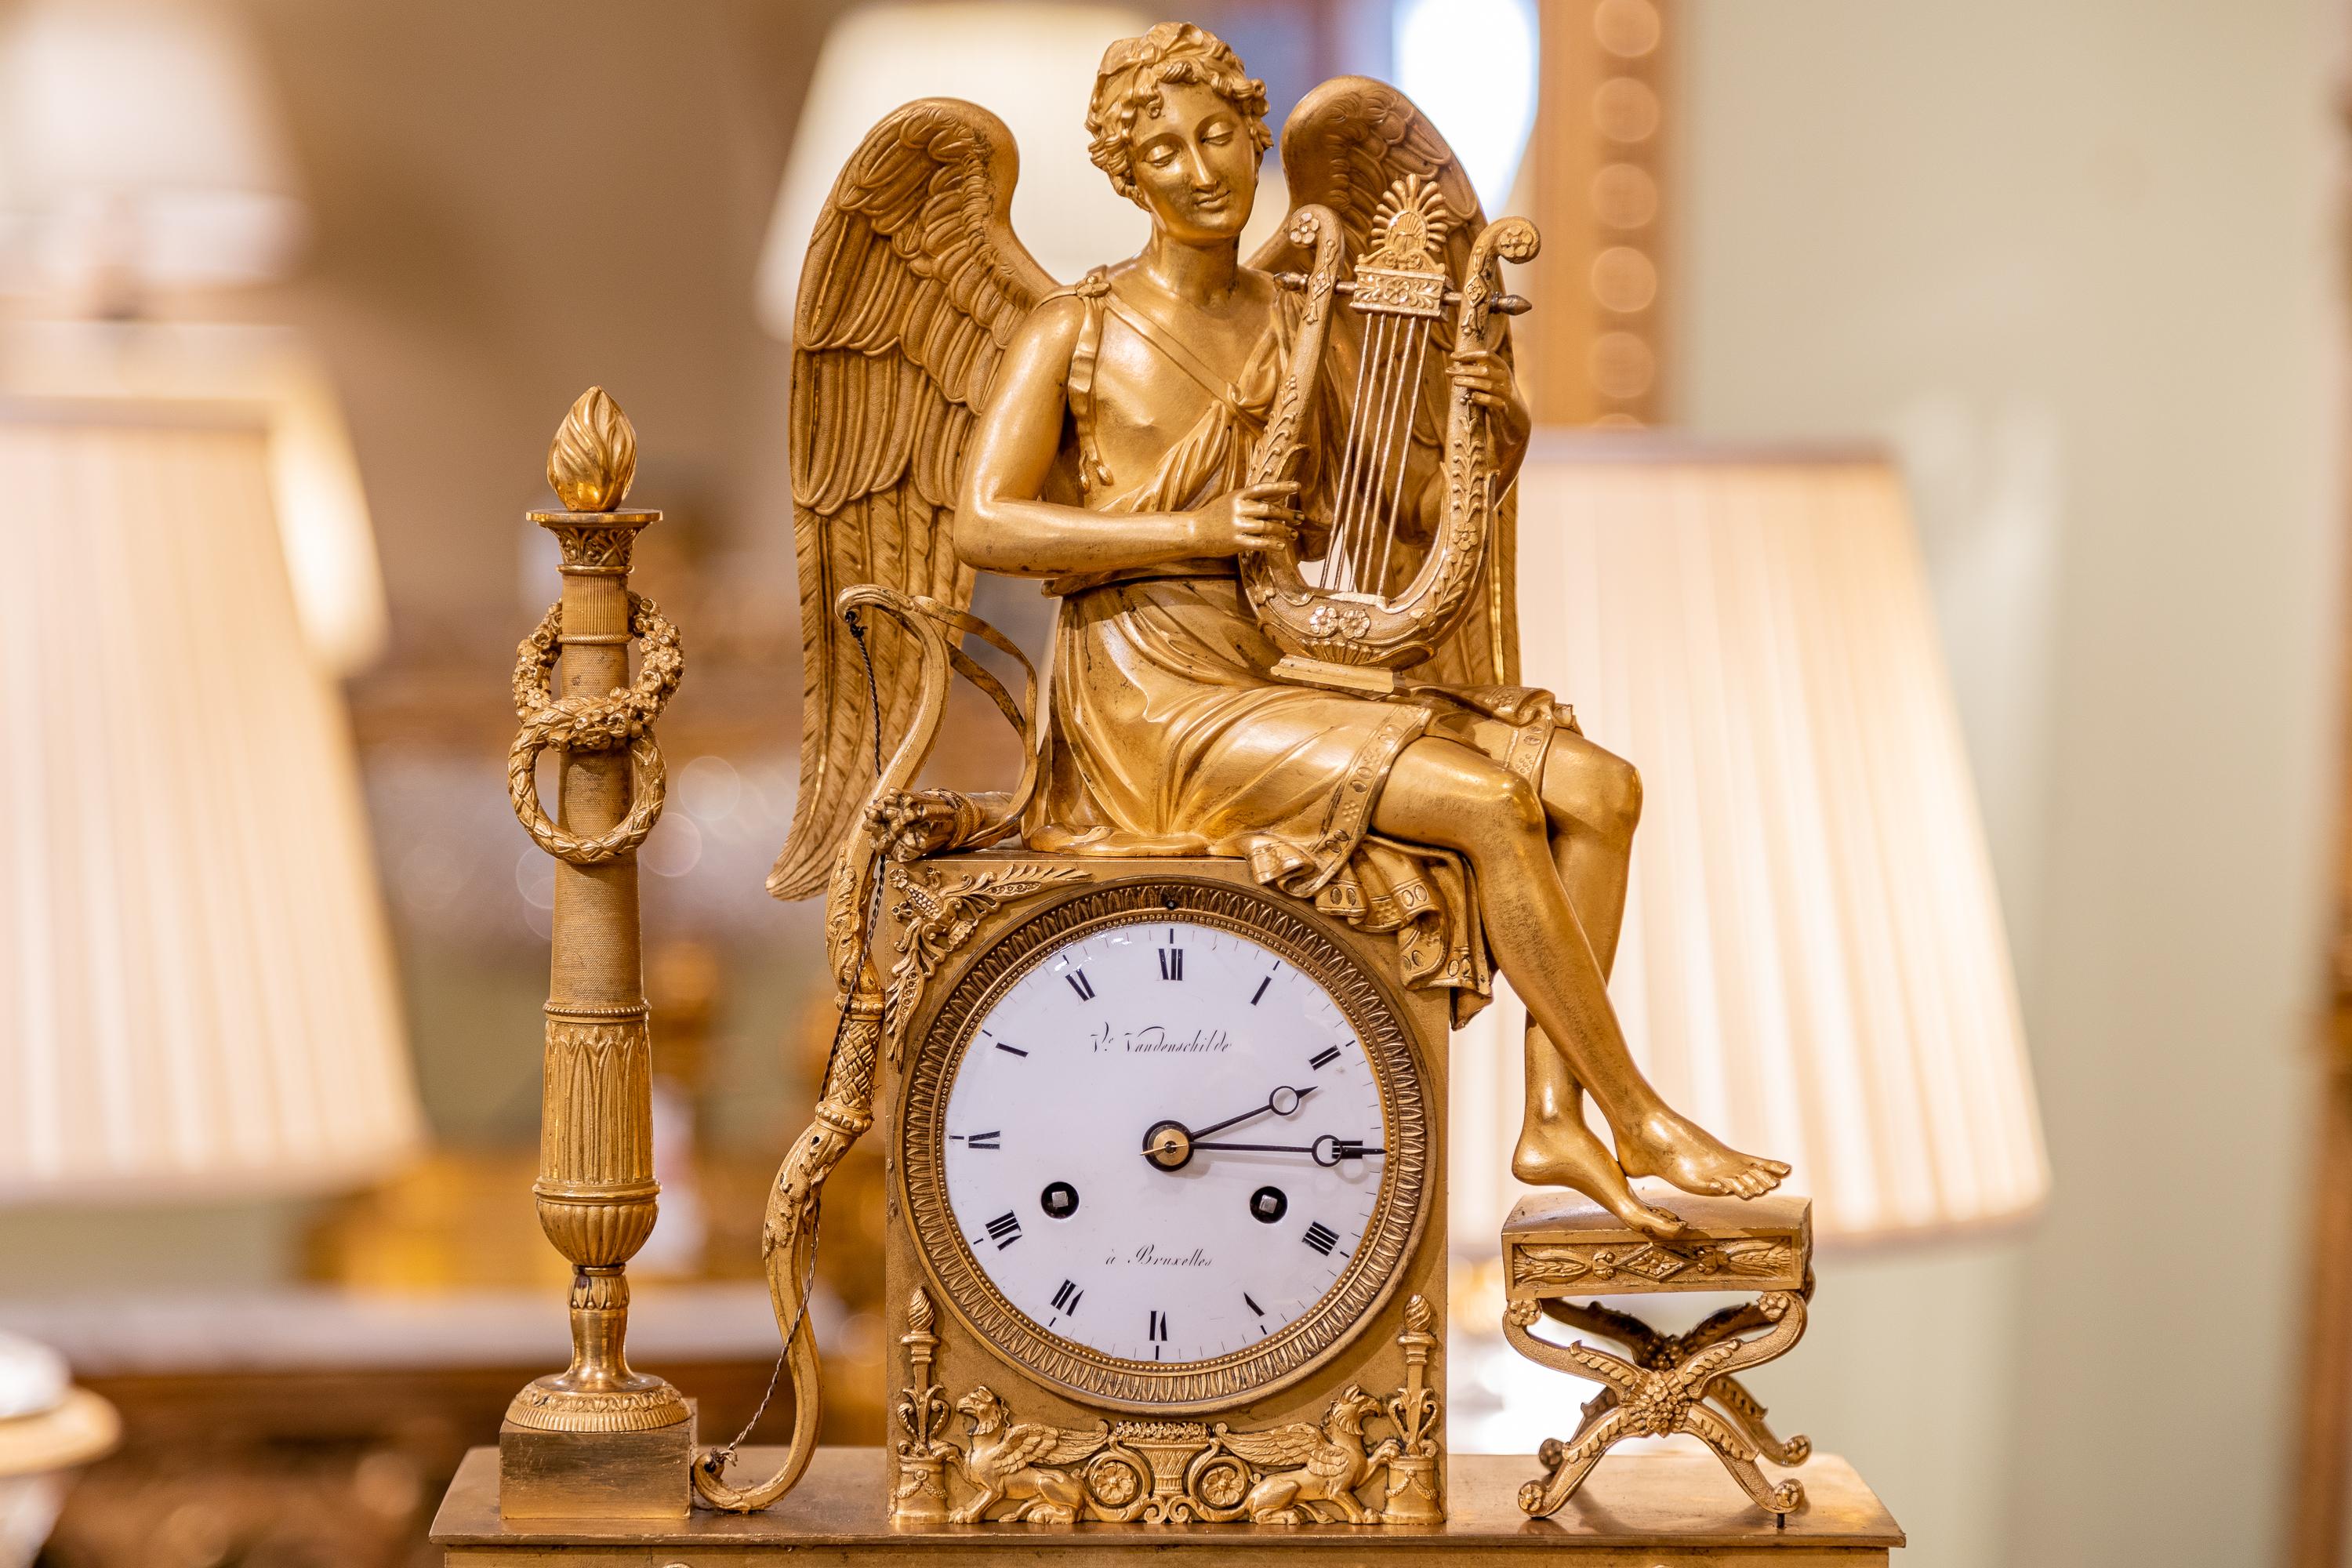 Très belle et rare horloge Empire en bronze doré au mercure de la fin du XVIIIe siècle. Signé V.I.I.I.  a Bruxelles 